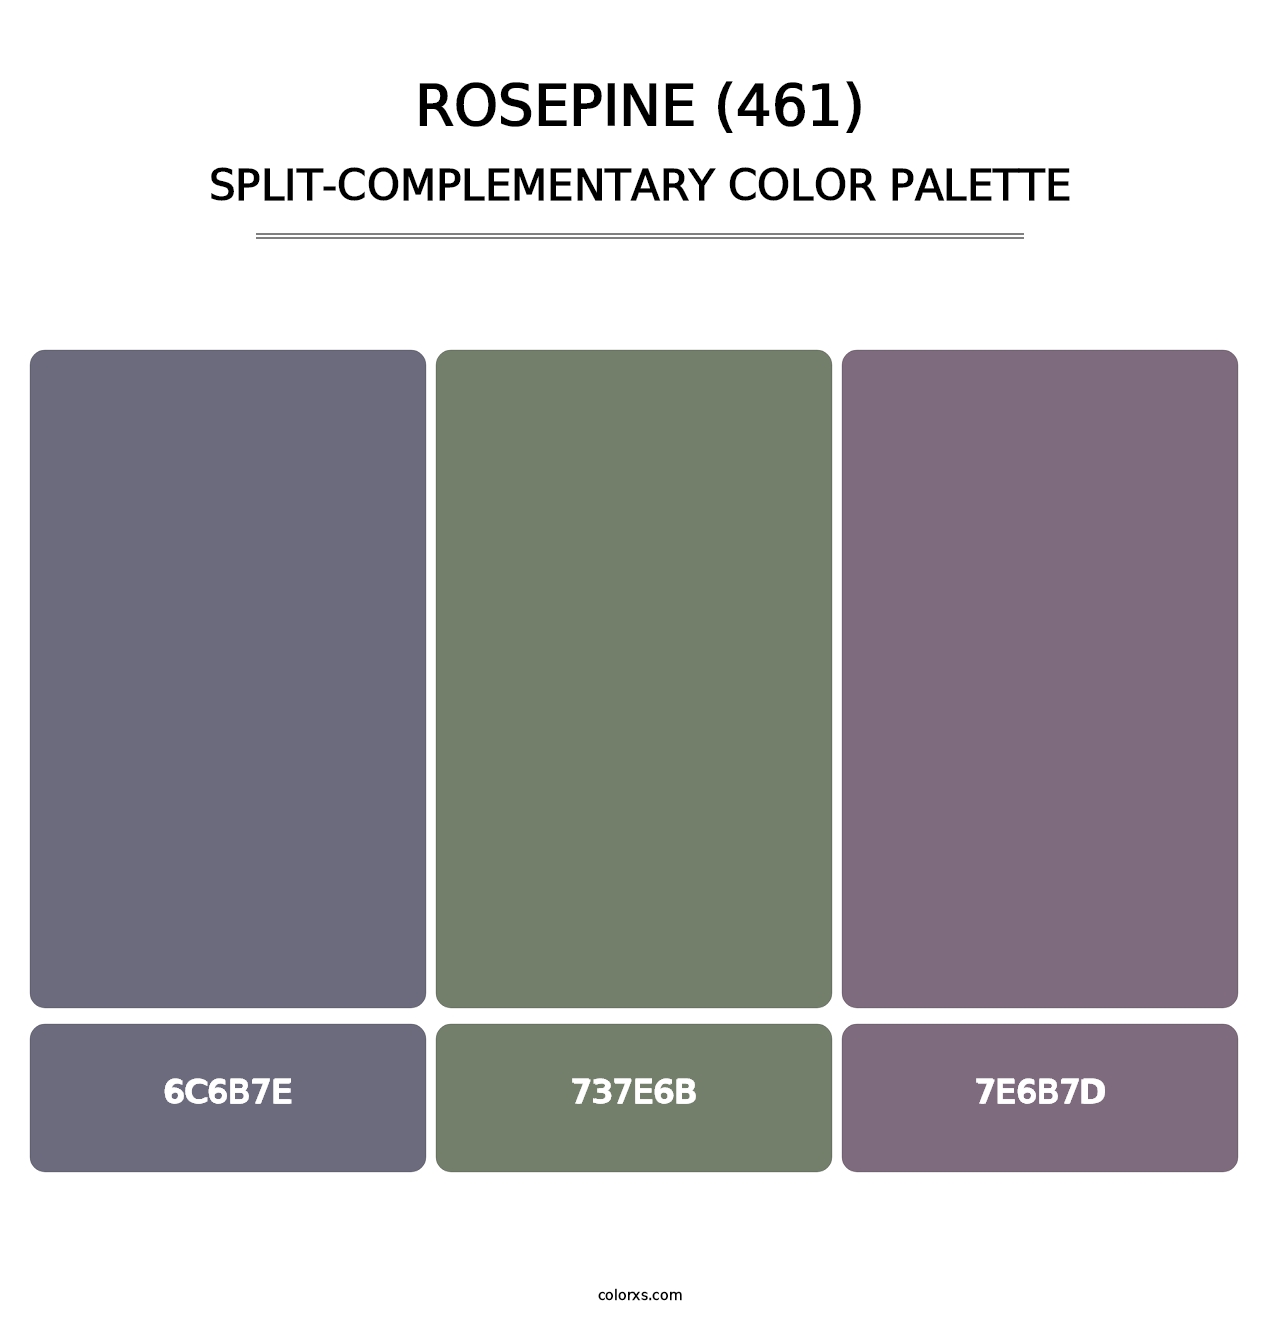 Rosepine (461) - Split-Complementary Color Palette